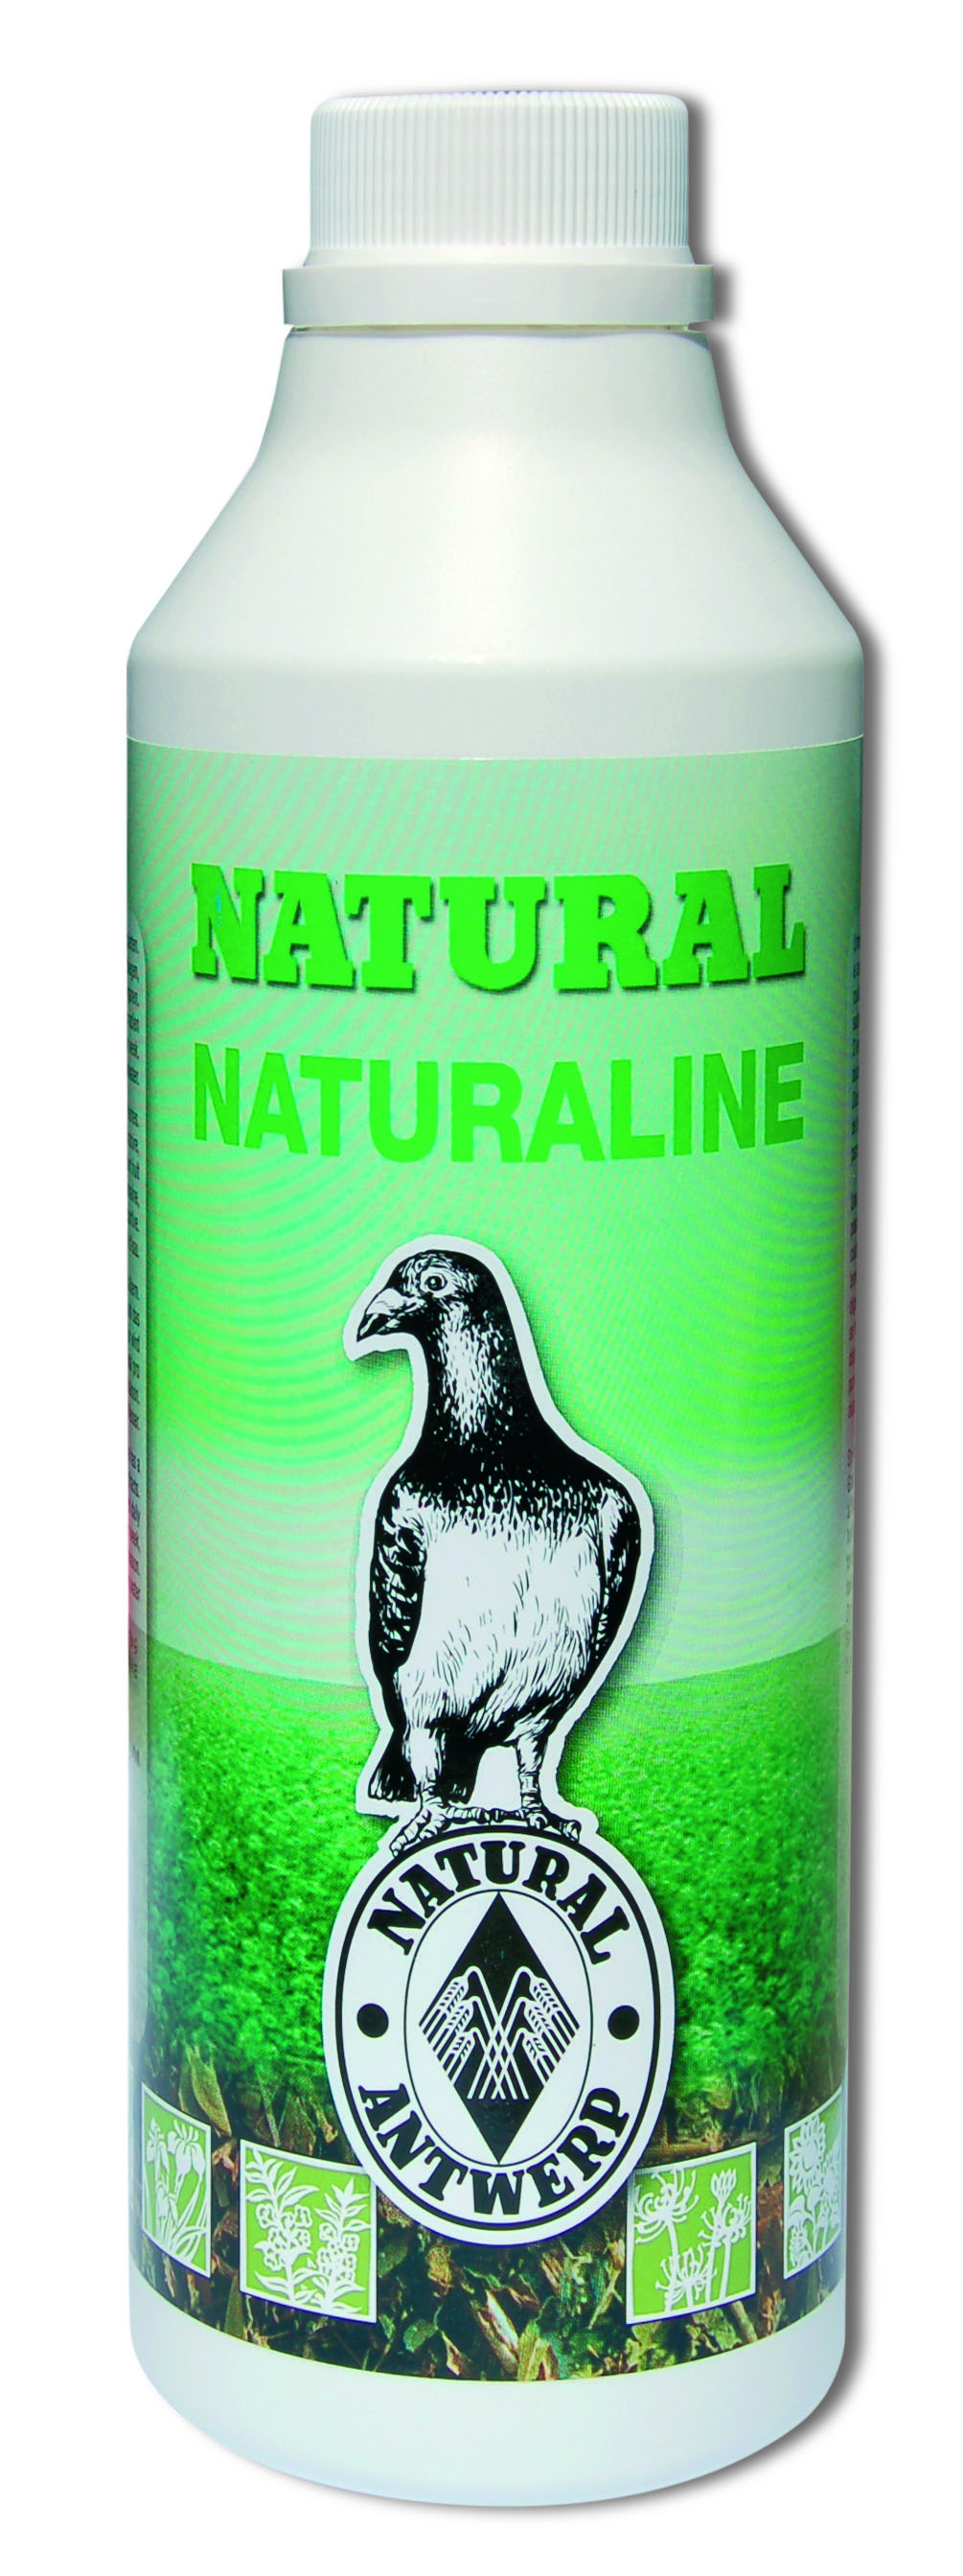 Natural naturaline  a6 c6 p924 - Product shot